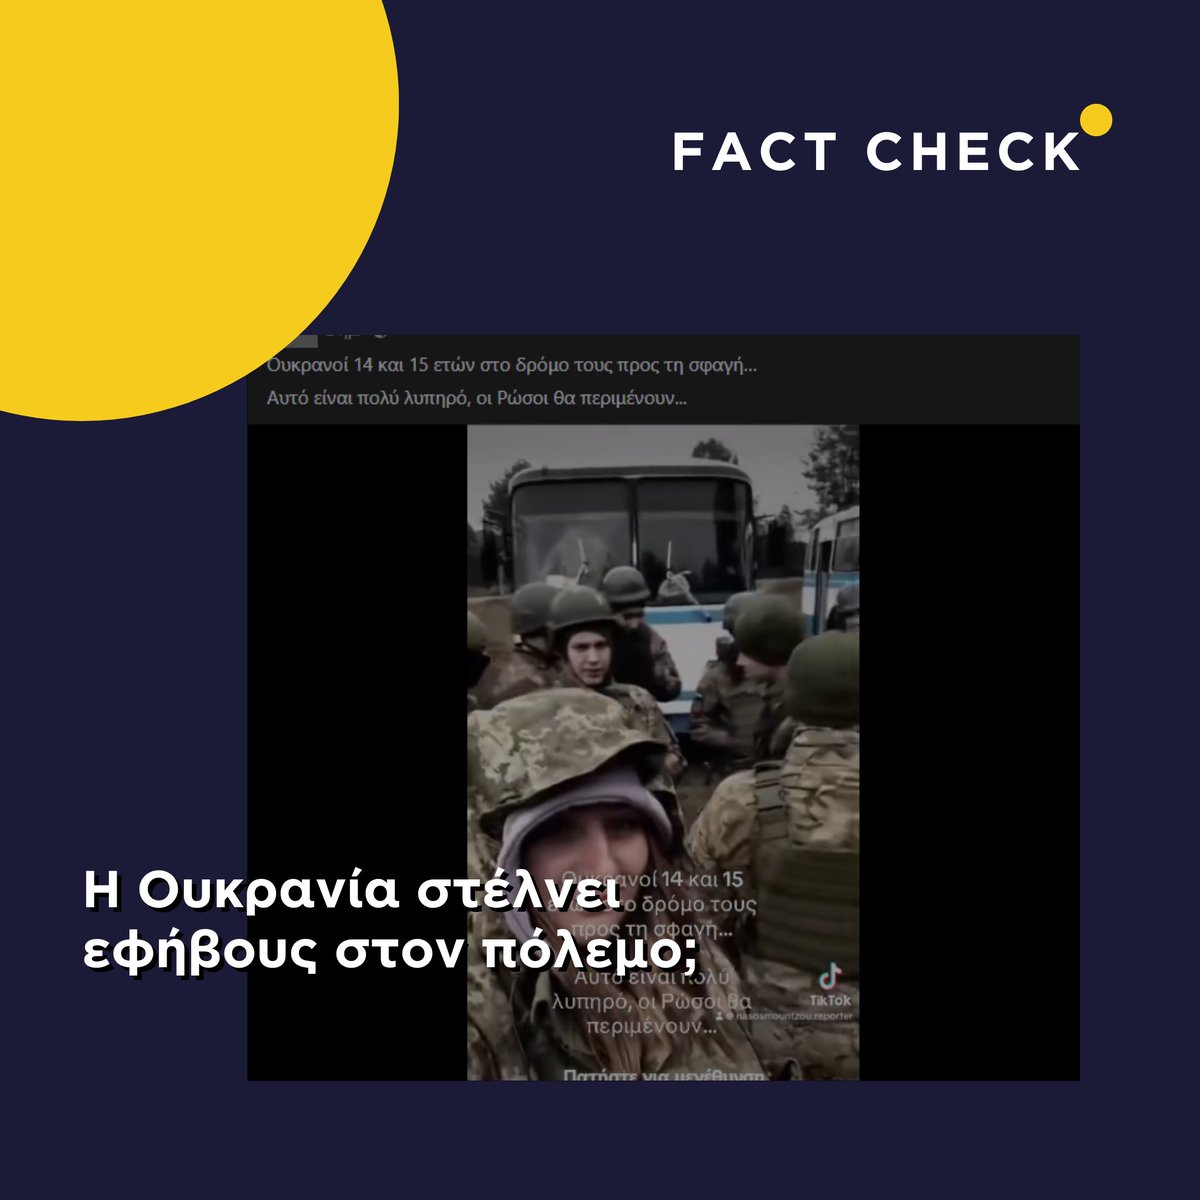 Bίντεο που κυκλοφορεί από τον Μάρτιο στα μέσα κοινωνικής δικτύωσης υποτίθεται ότι δείχνει Ουκρανούς εφήβους να κατευθύνονται στον πόλεμο λόγω της υποτιθέμενης έλλειψης στρατιωτών.
Διαβάστε τι ισχύει εδώ:
bit.ly/3Uone5h
#EDMOeu #MedDMO #FactChecking #News